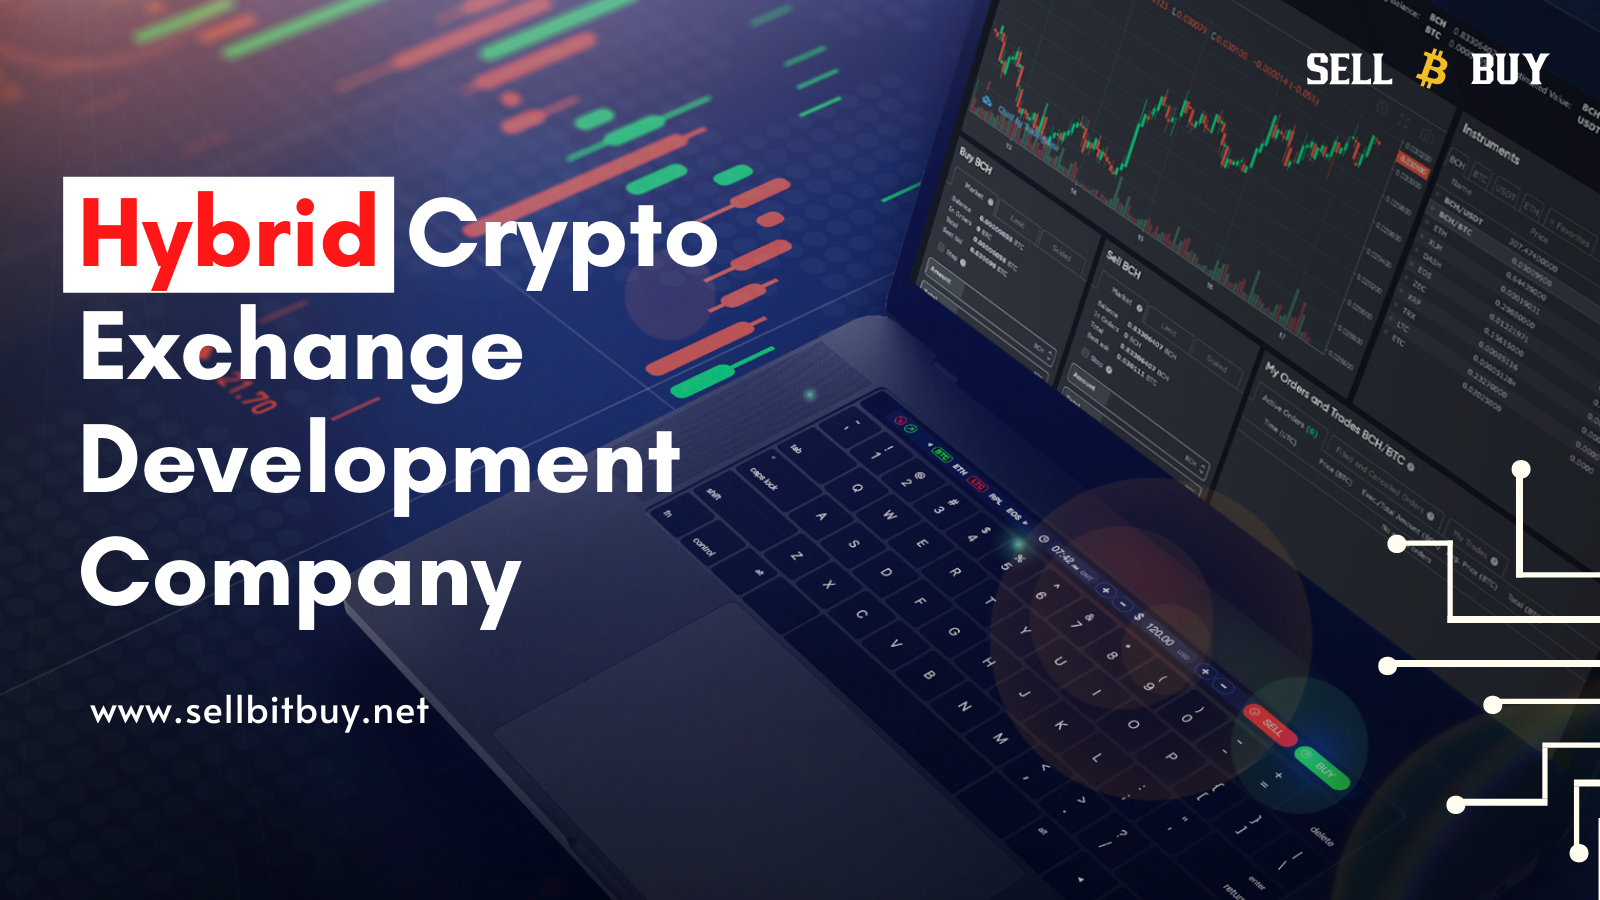 Hybrid Crypto Exchange Software Development Company